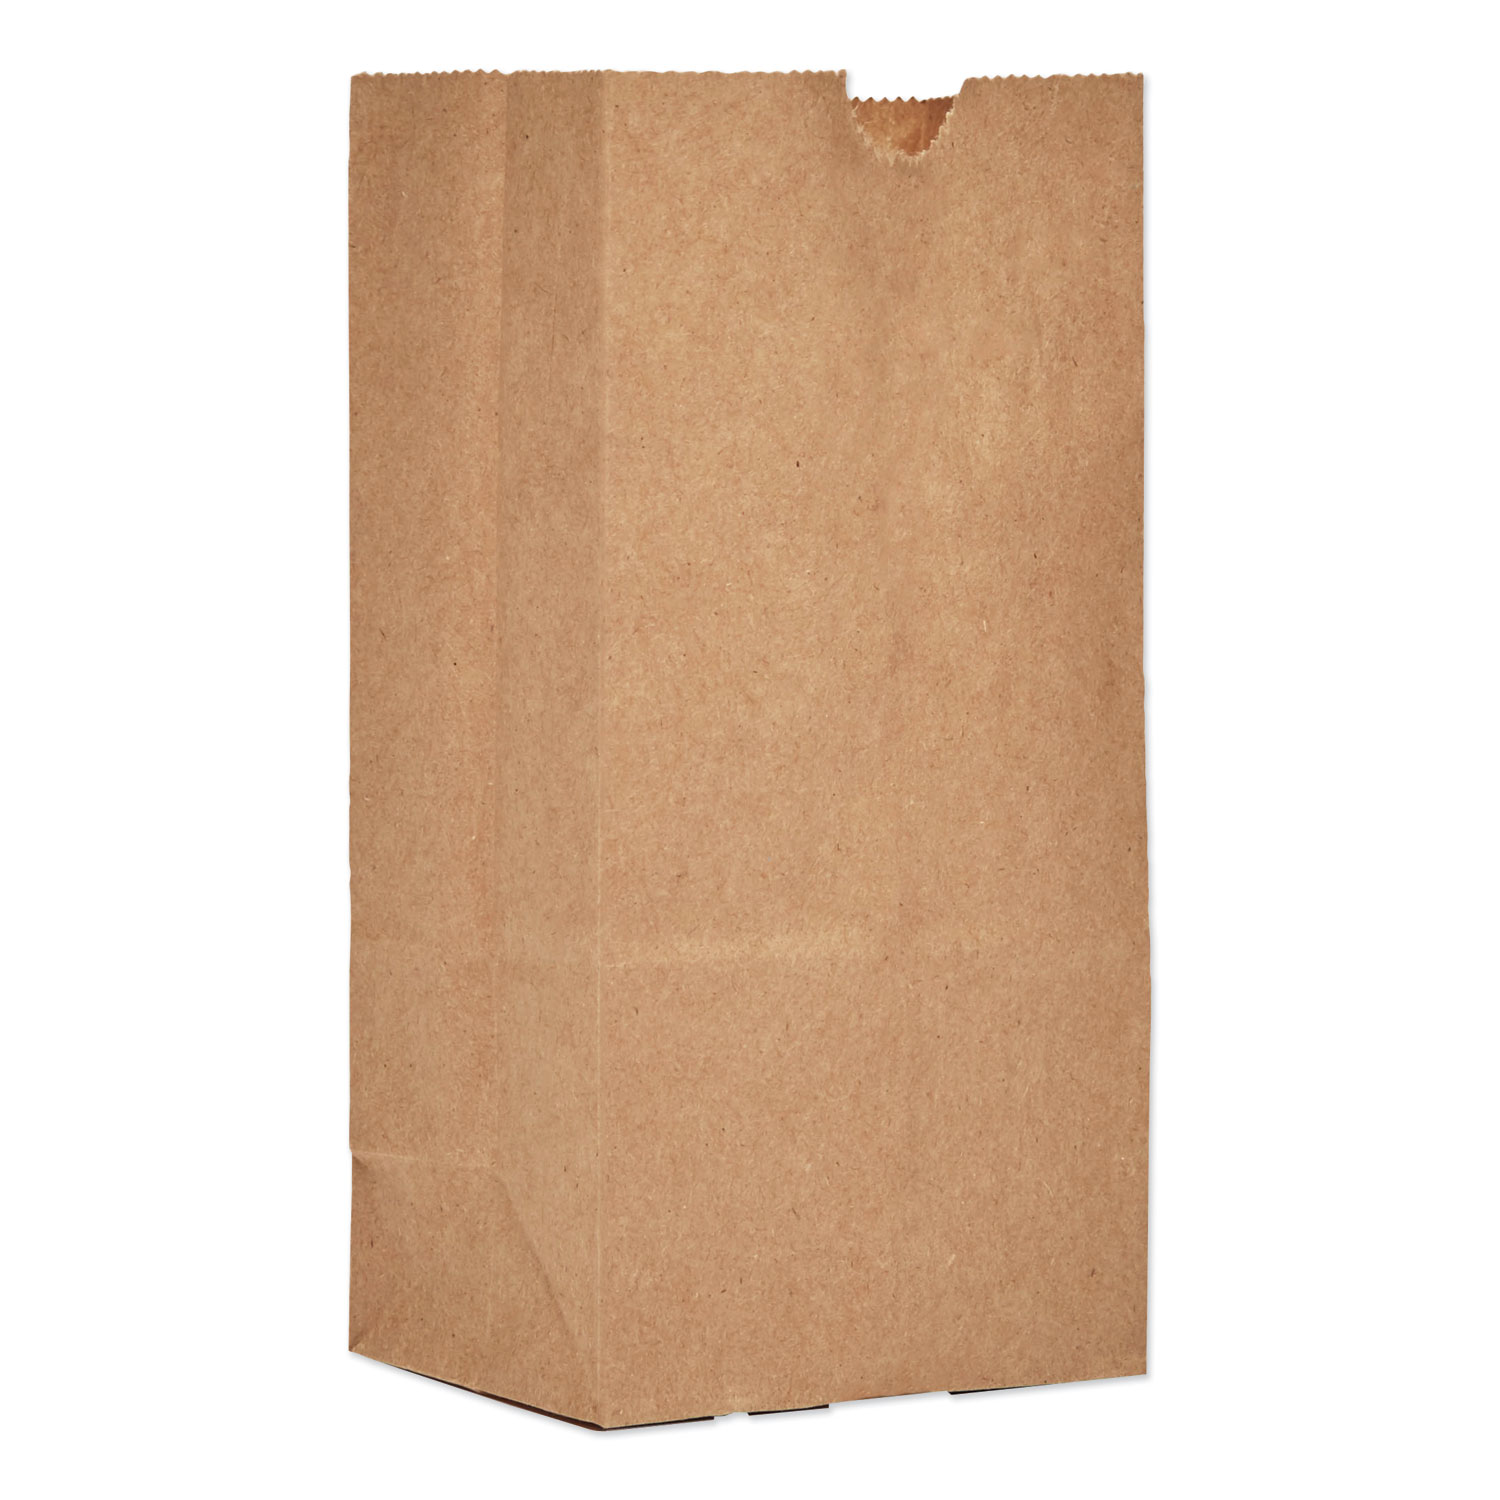  General GK1-500 Grocery Paper Bags, 30 lbs Capacity, #1, 3.5w x 2.38d x 6.88h, Kraft, 500 Bags (BAGGK1500) 